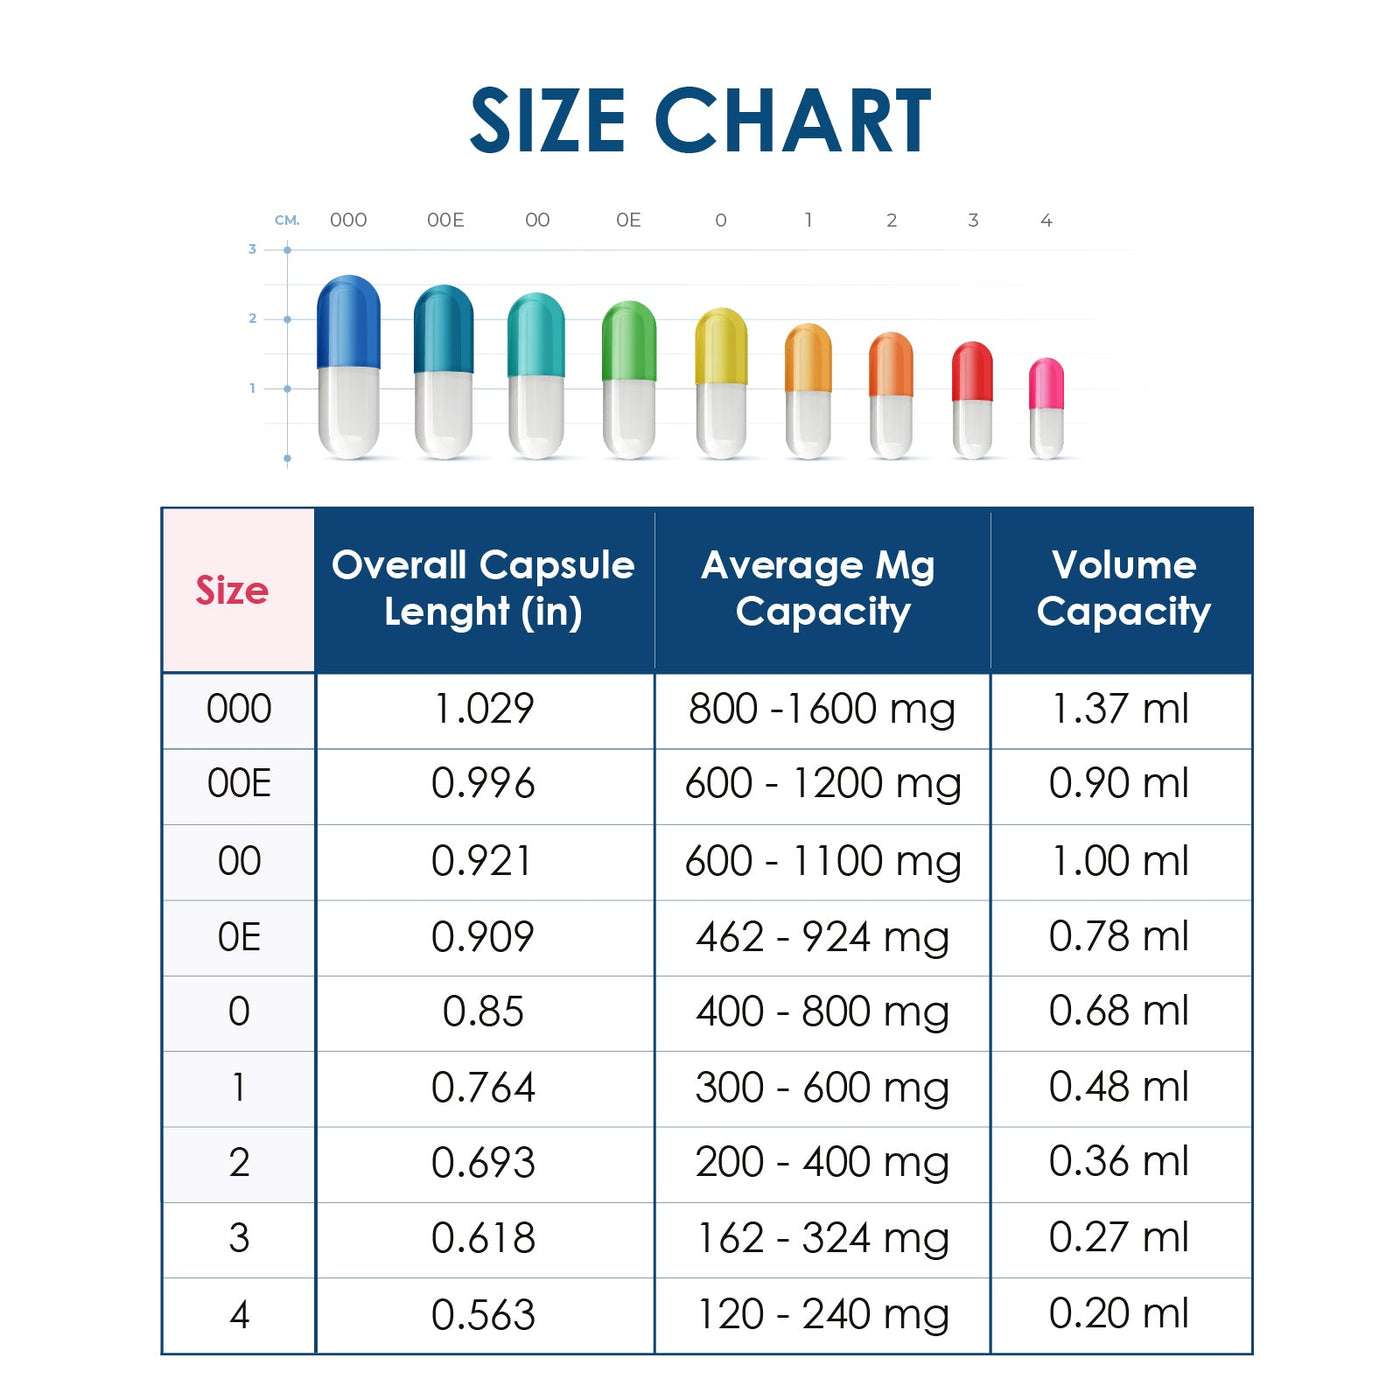 Colored Size 00 Empty Vegetarian Capsules by Capsuline - Aqua Blue 1000 Count - 1000